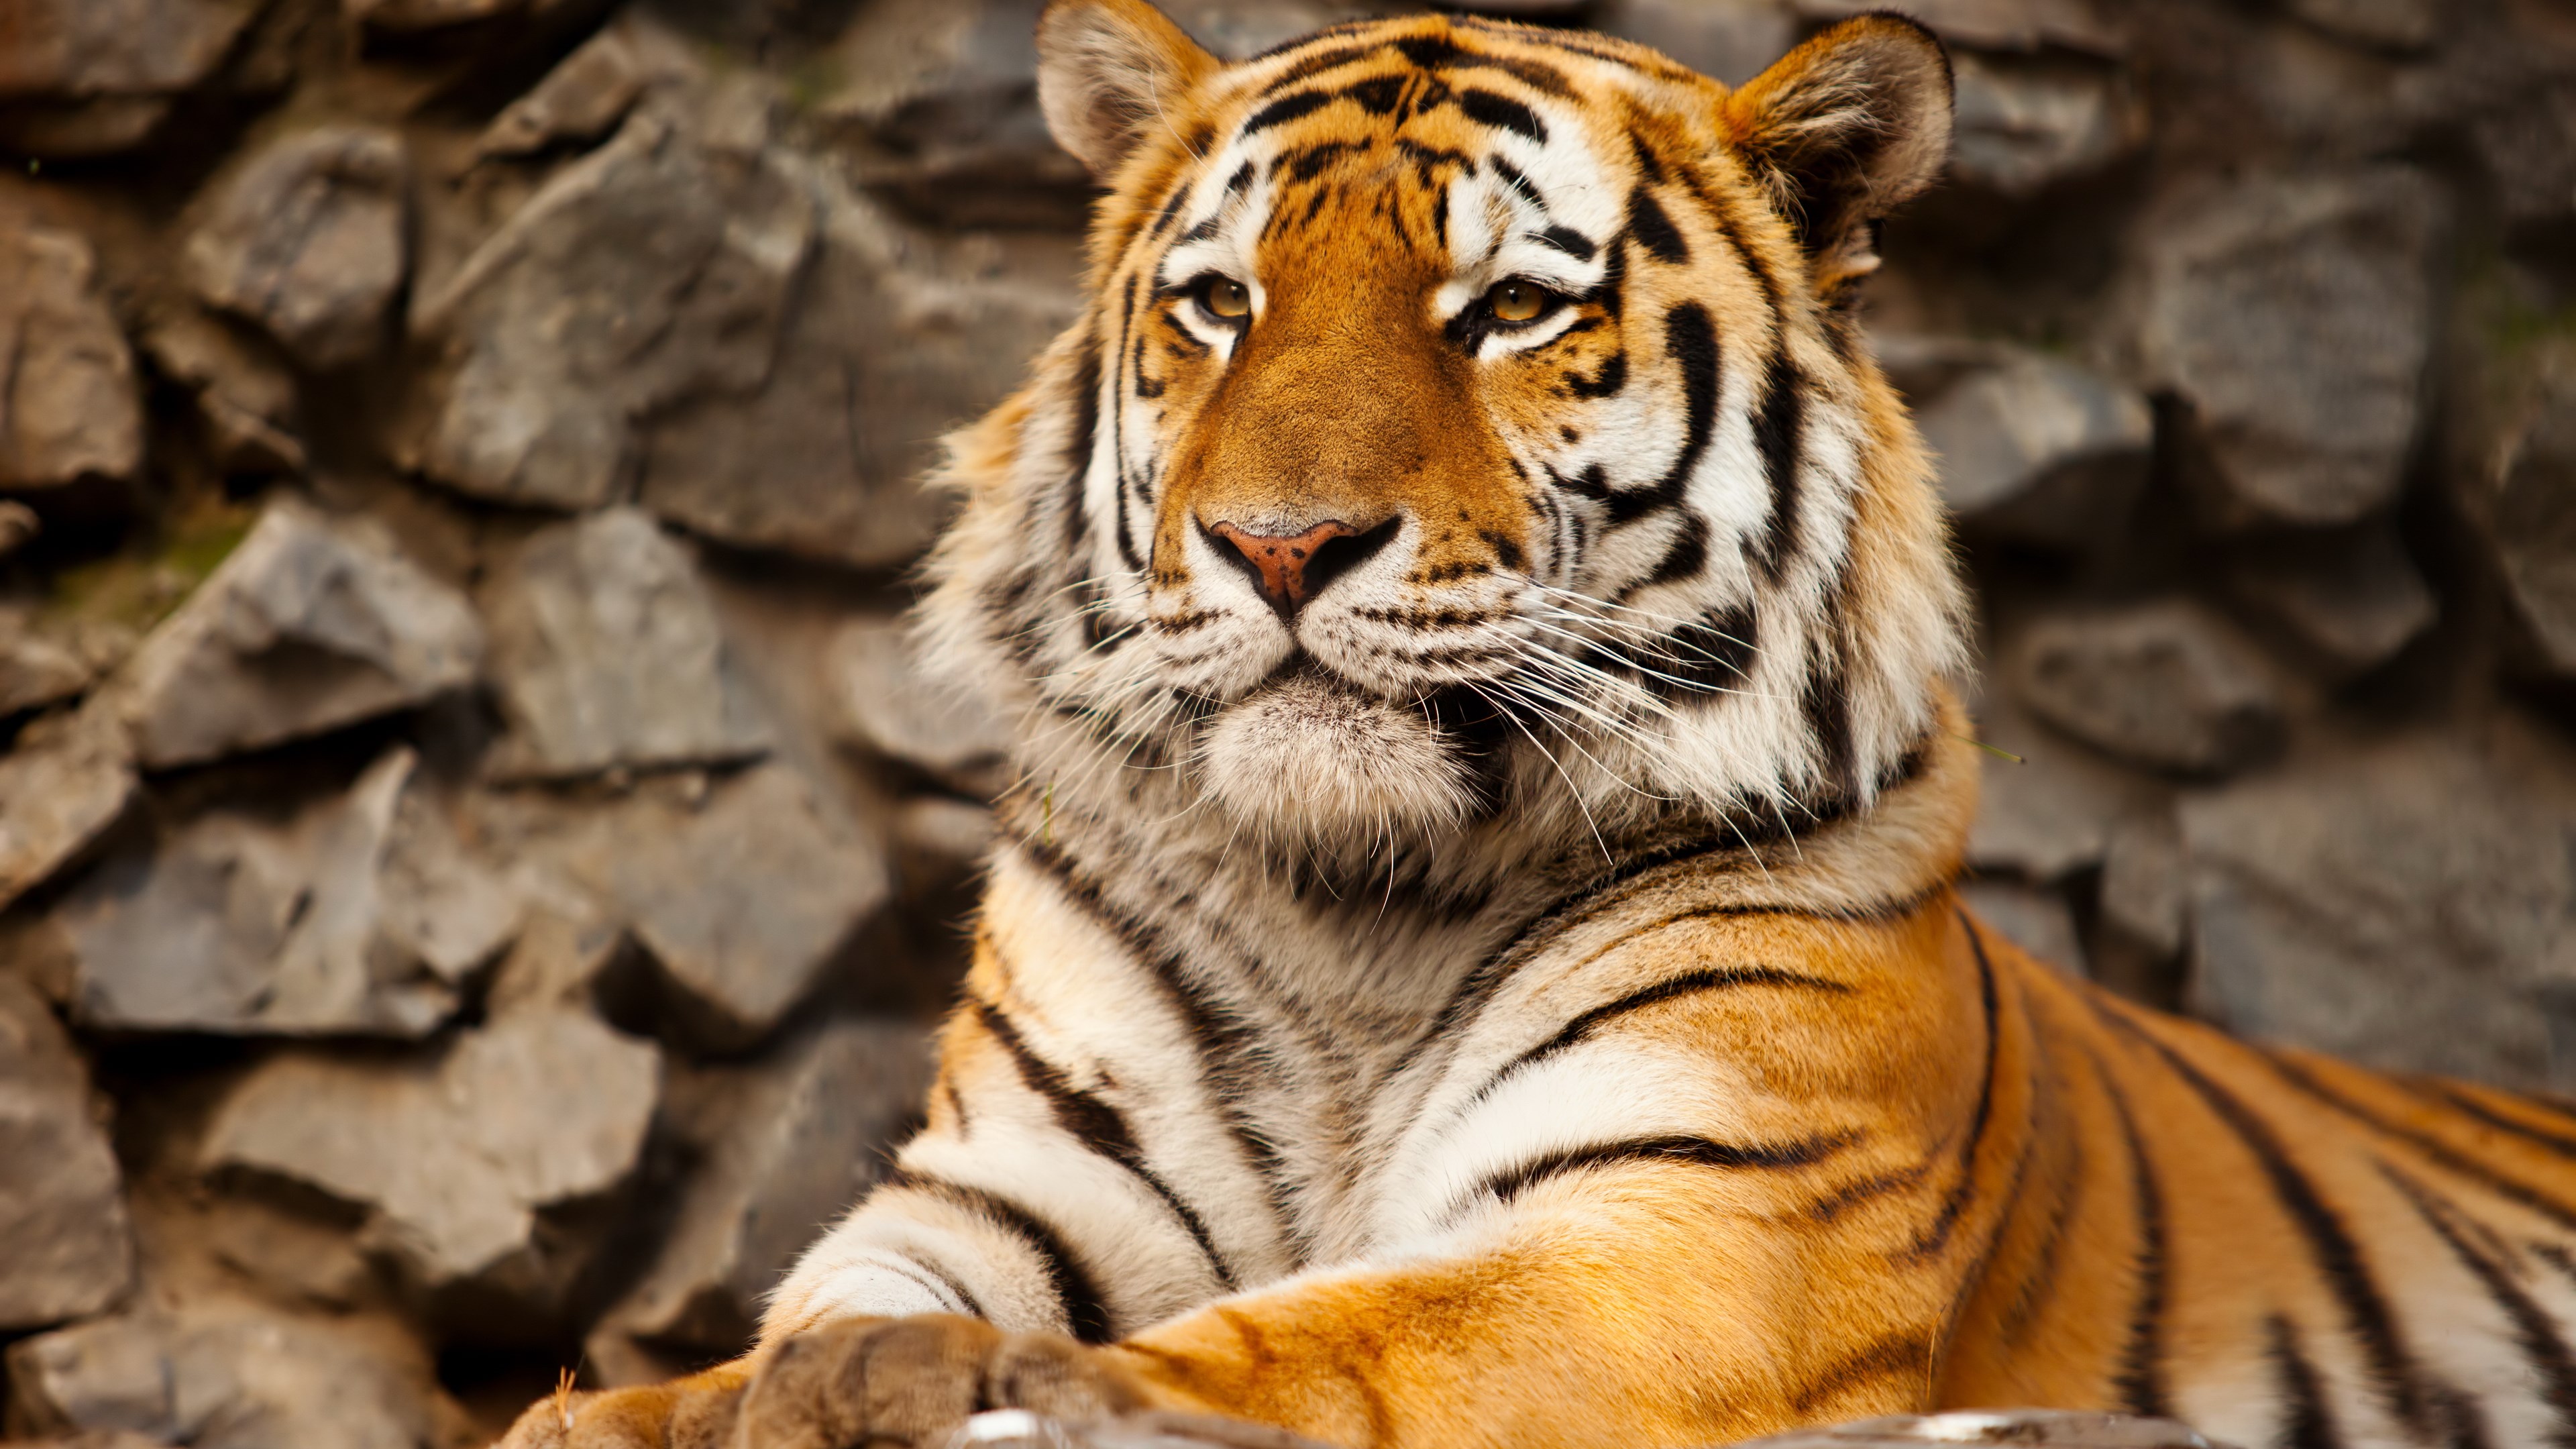 Free download 1018 tiger wallpaper 4k Tiger wallpaper 4k tiger images